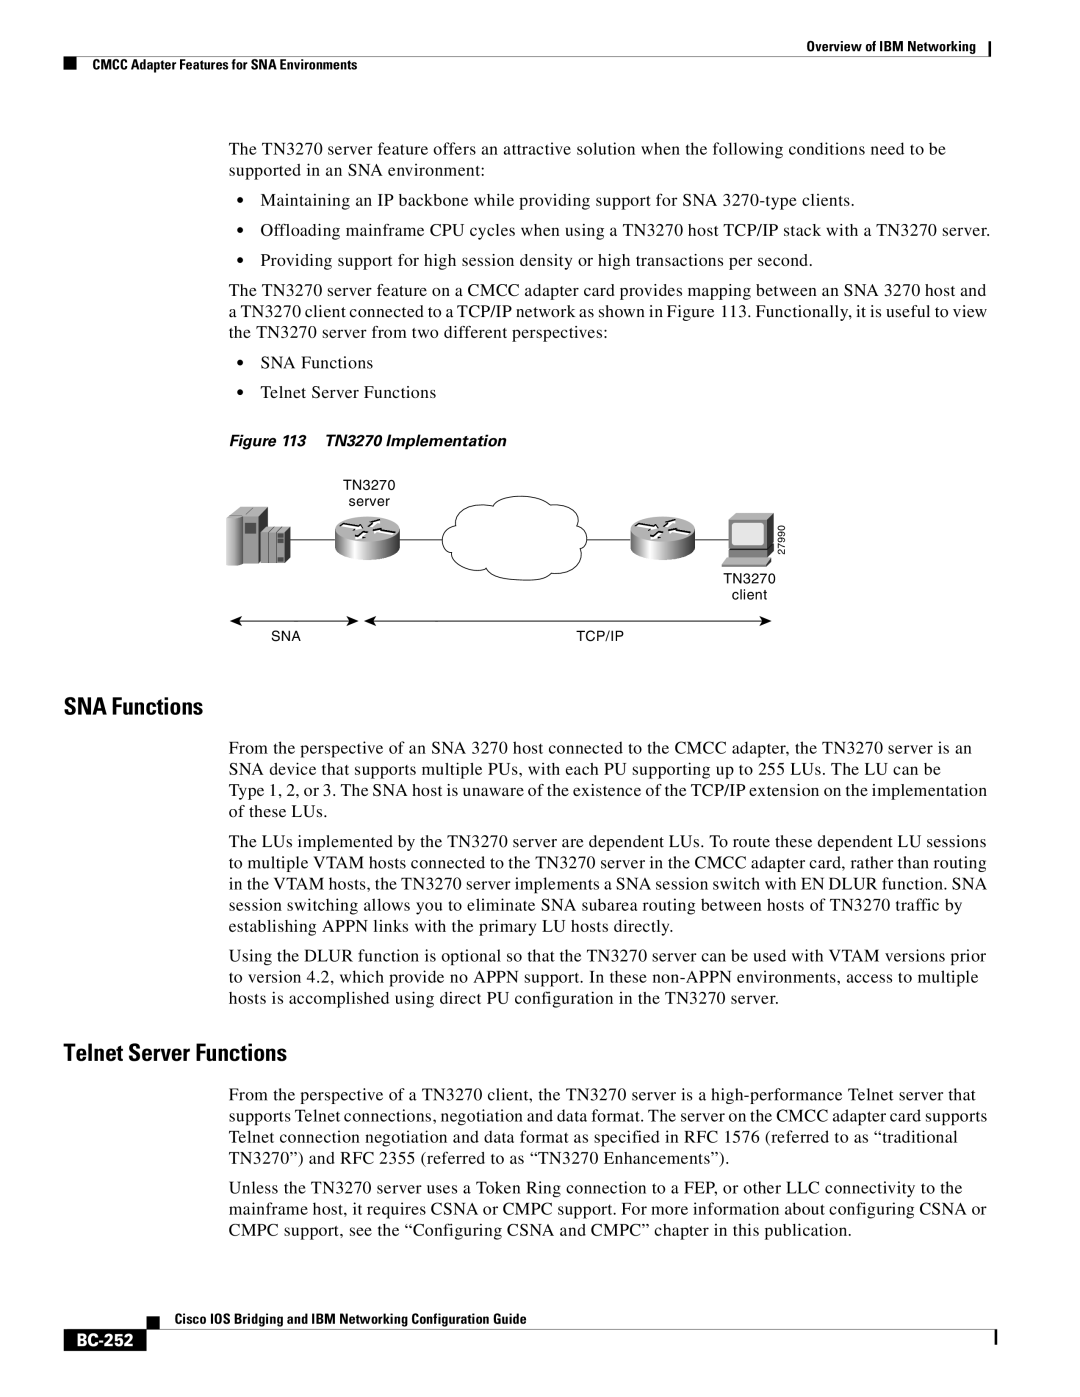 IBM BC-203 manual SNA Functions, Telnet Server Functions, BC-252 